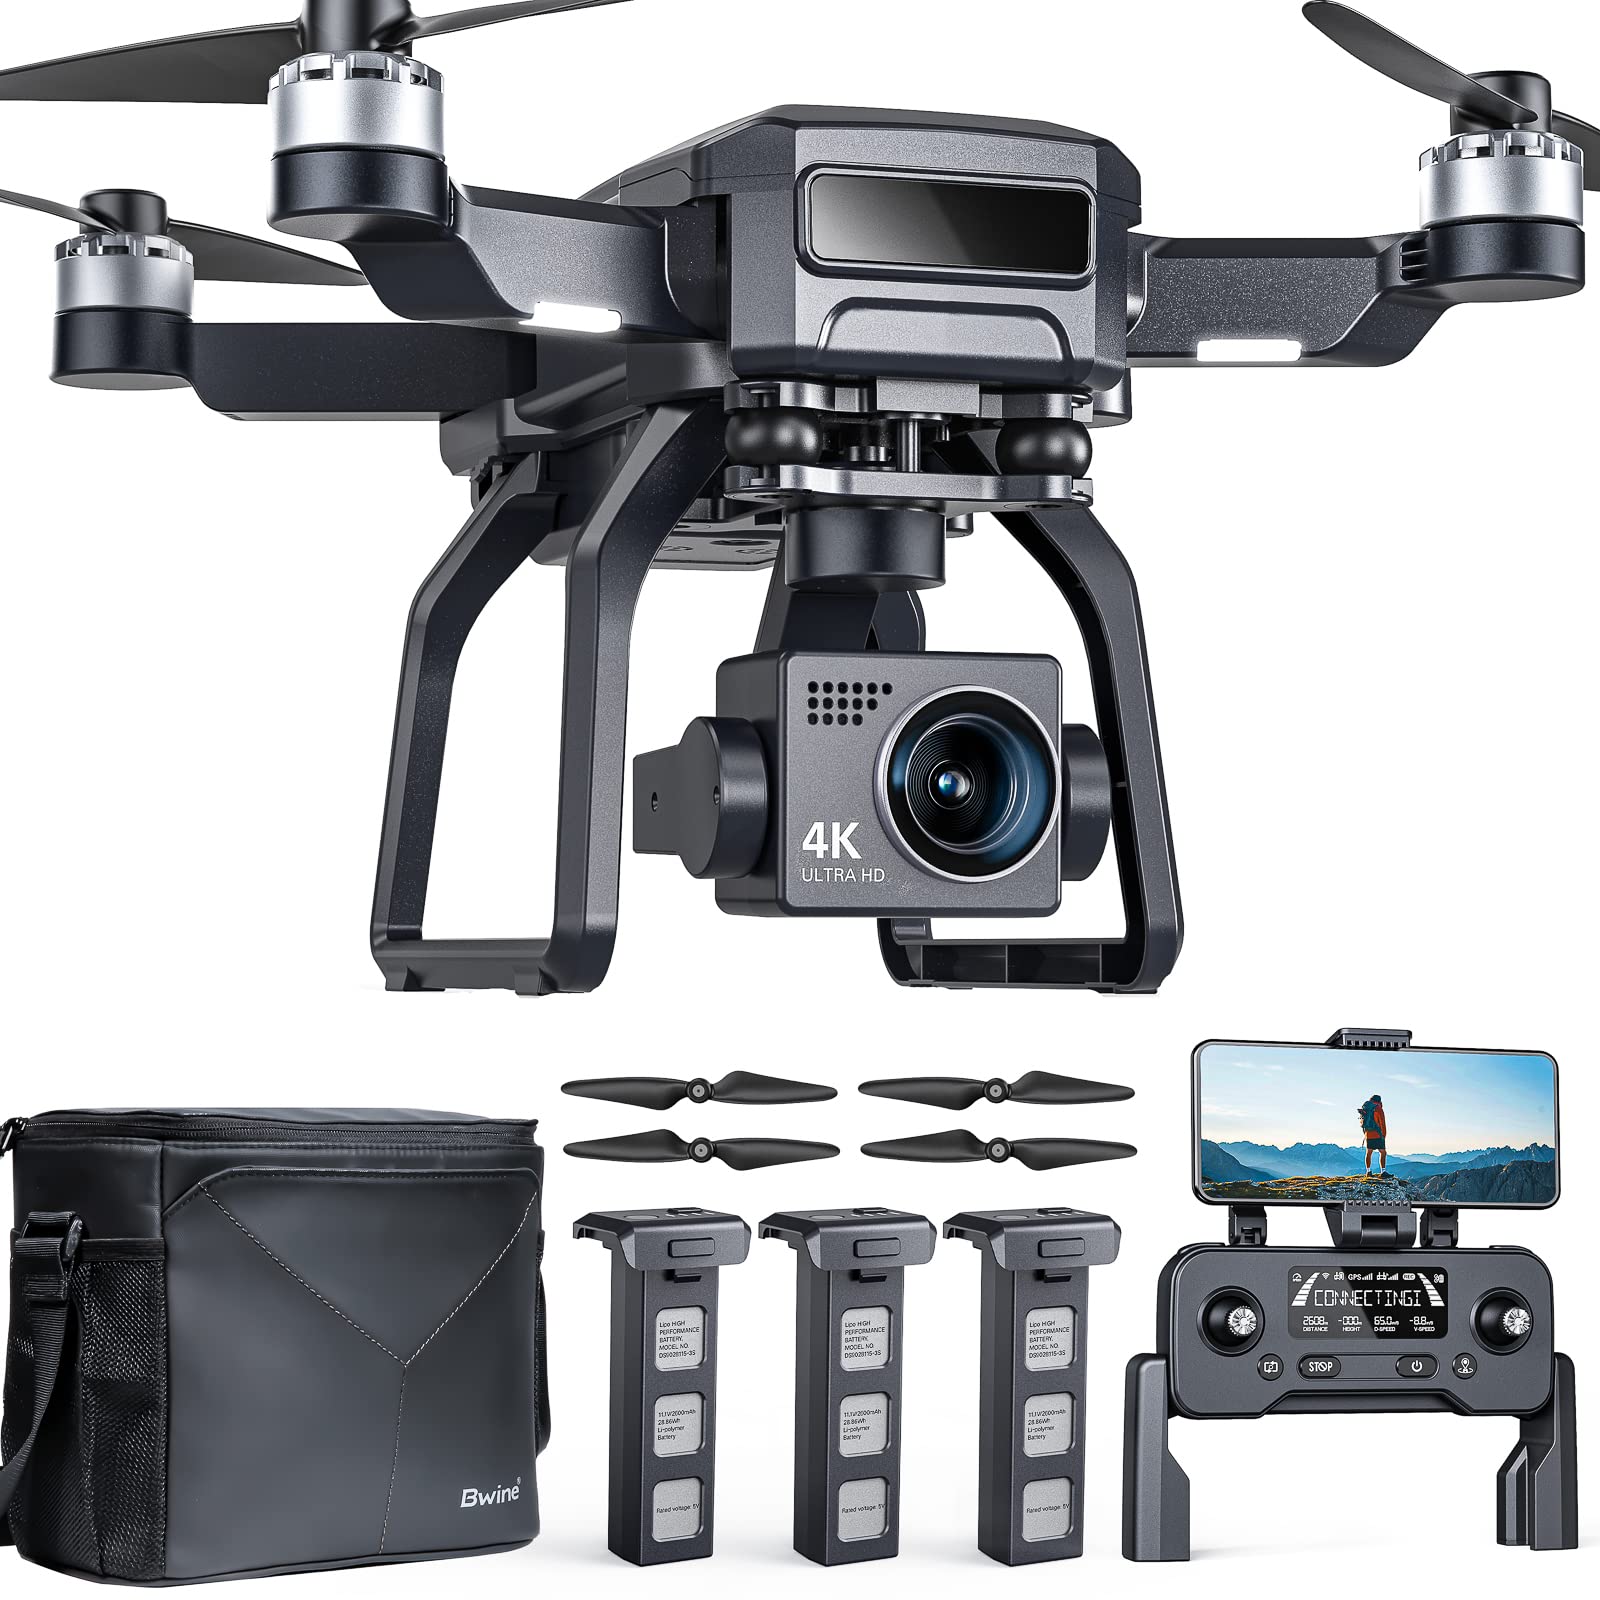  Bwine F7 GPS 摄像头专业无人机，已通过 FAA 认证，适合成人 4K 夜视，3 轴云台，2 英里长距离，75 分钟飞行时间，含 3 块电池，自动返航+跟随我+环绕飞行...